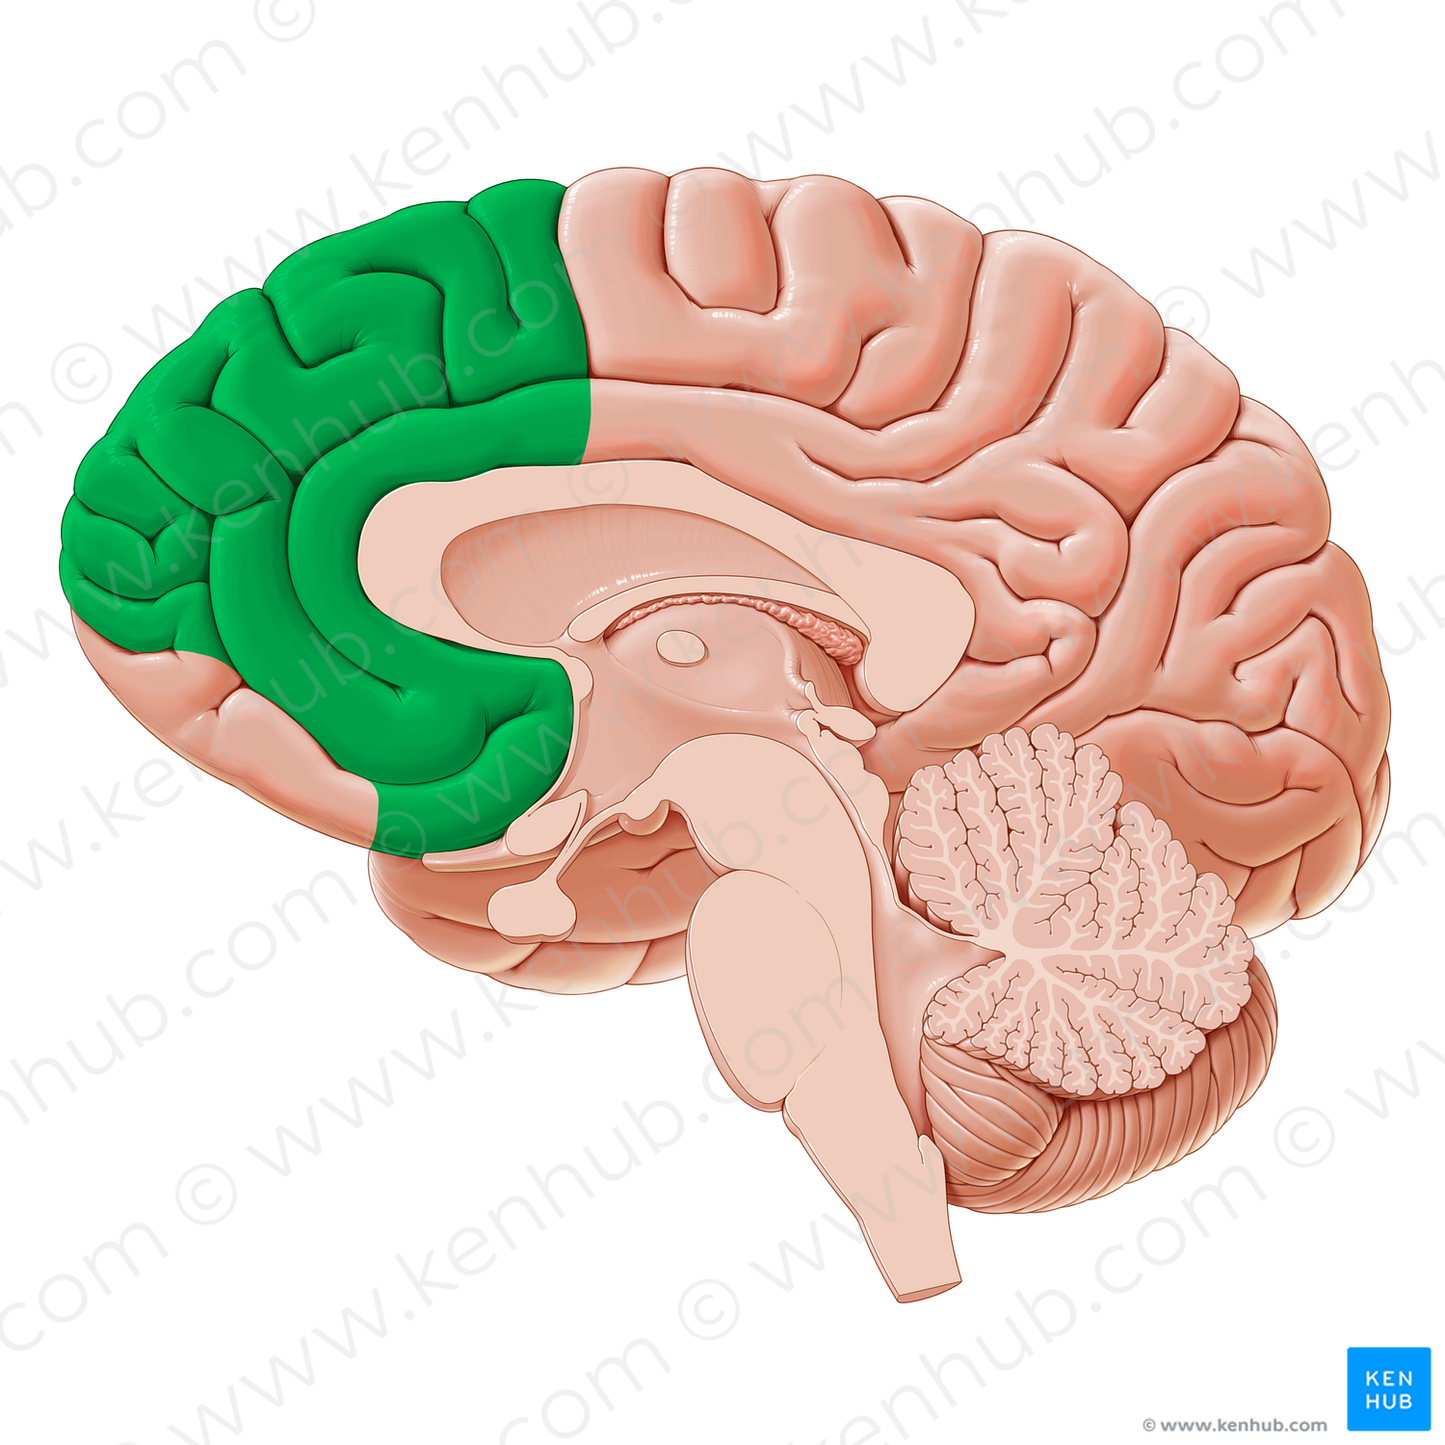 Medial region of prefrontal cortex (#20333)